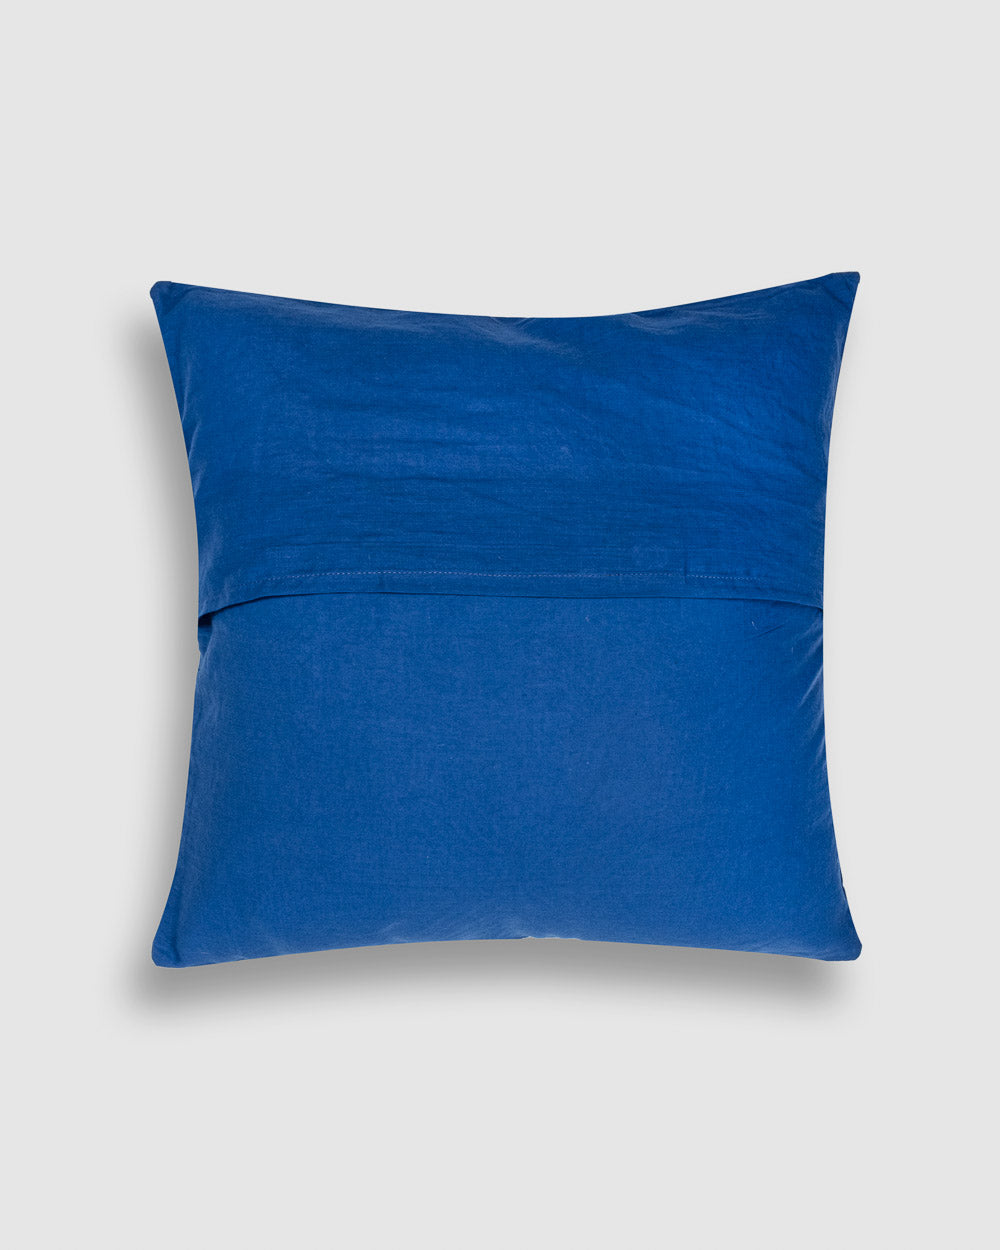 Cushion Cover Applique Ankuddiya Design, Blue